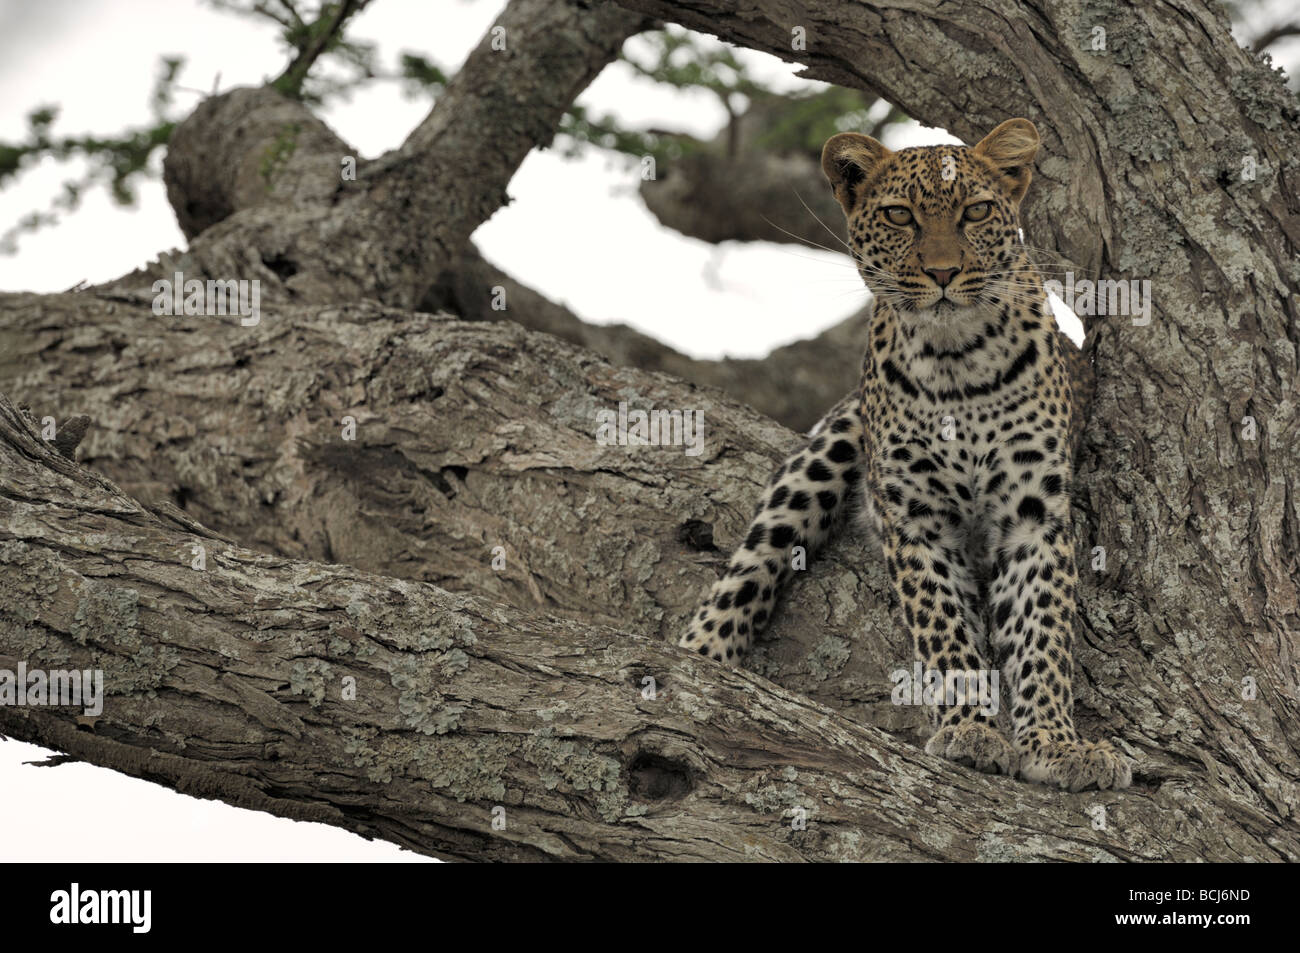 Stock photo of a leopard resting in a large acacia tree, Ndutu, Ngorongoro Conservation Area, Tanzania, February 2009. Stock Photo